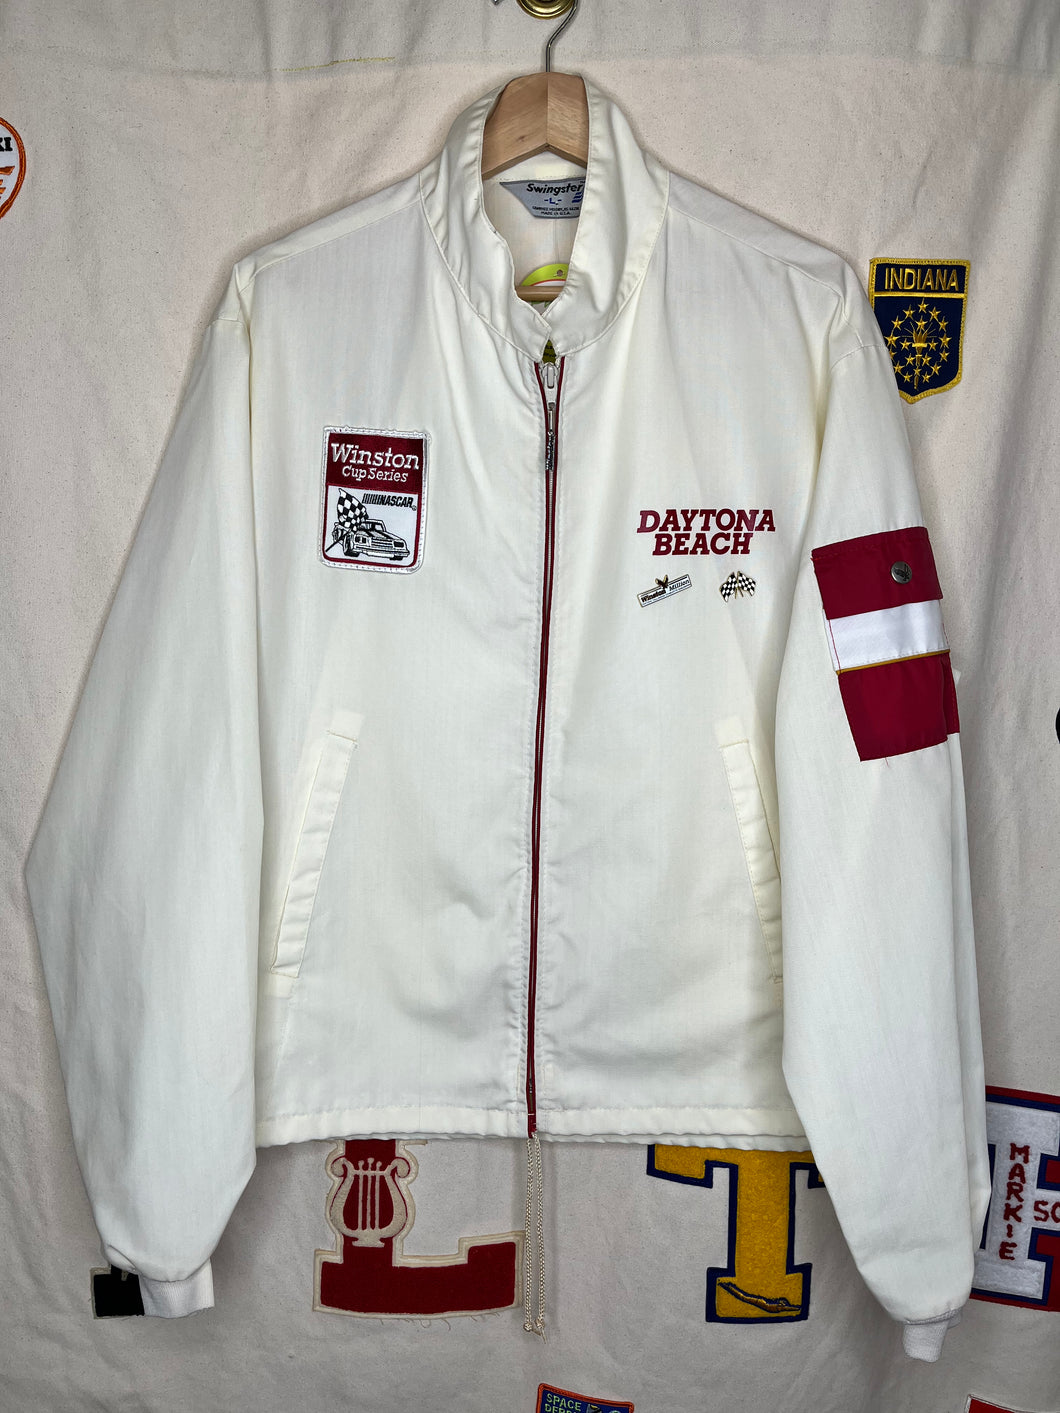 Vintage Winston Cup Racing Dayton Beach White Cotton Jacket: Large